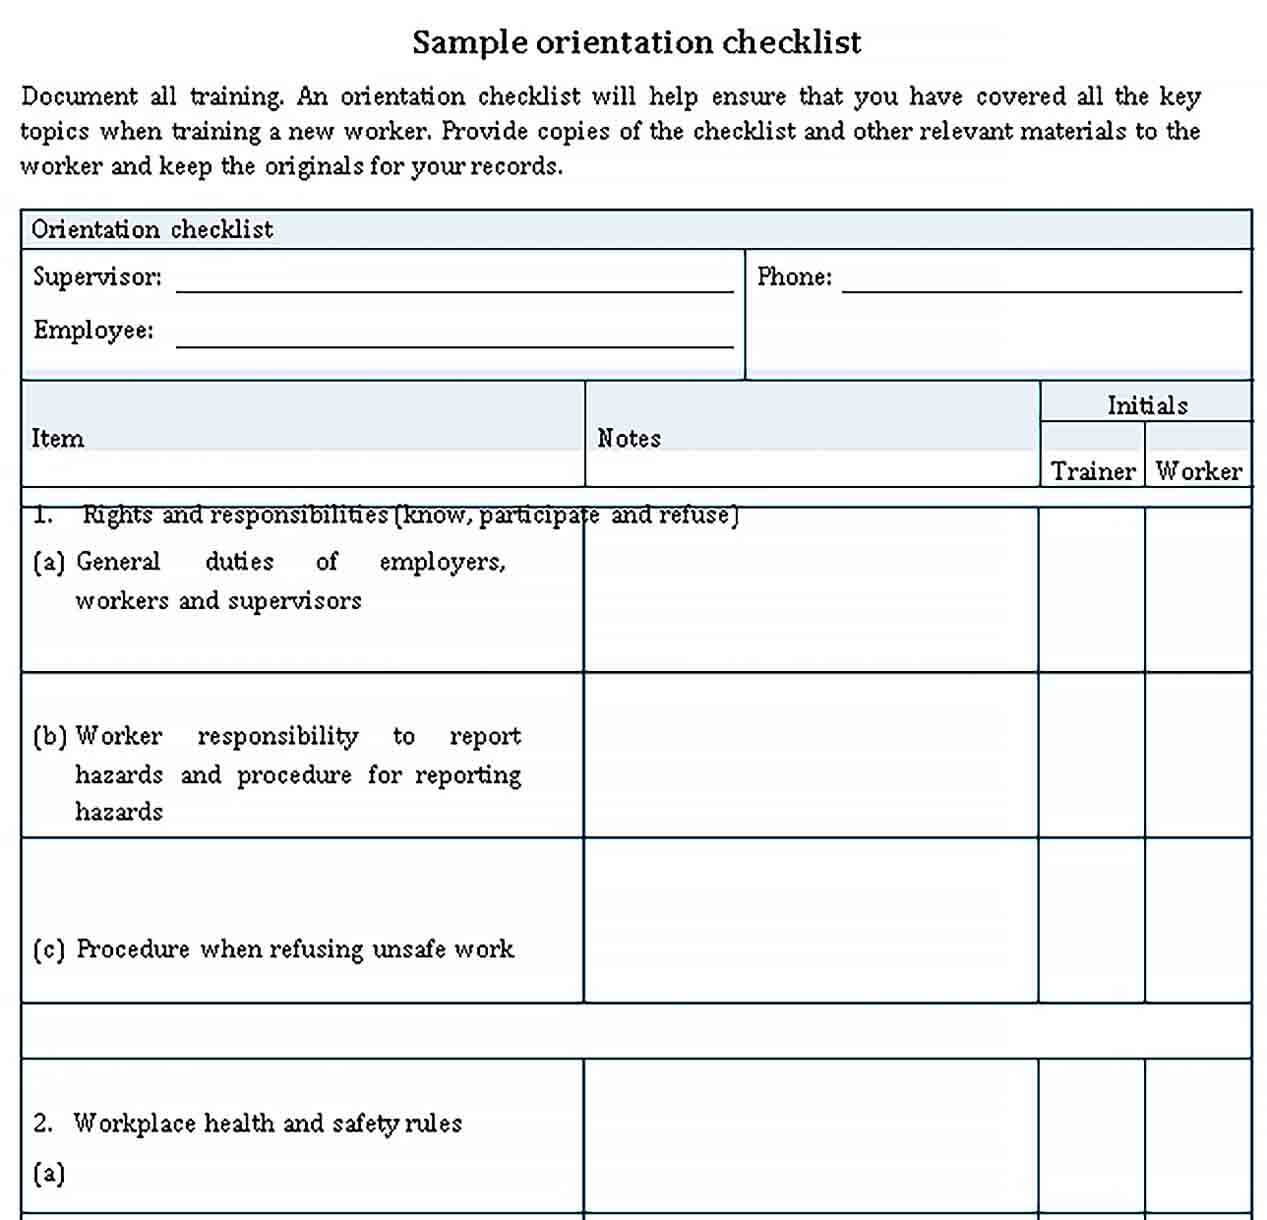 Sample Sample Orientation Checklist Template